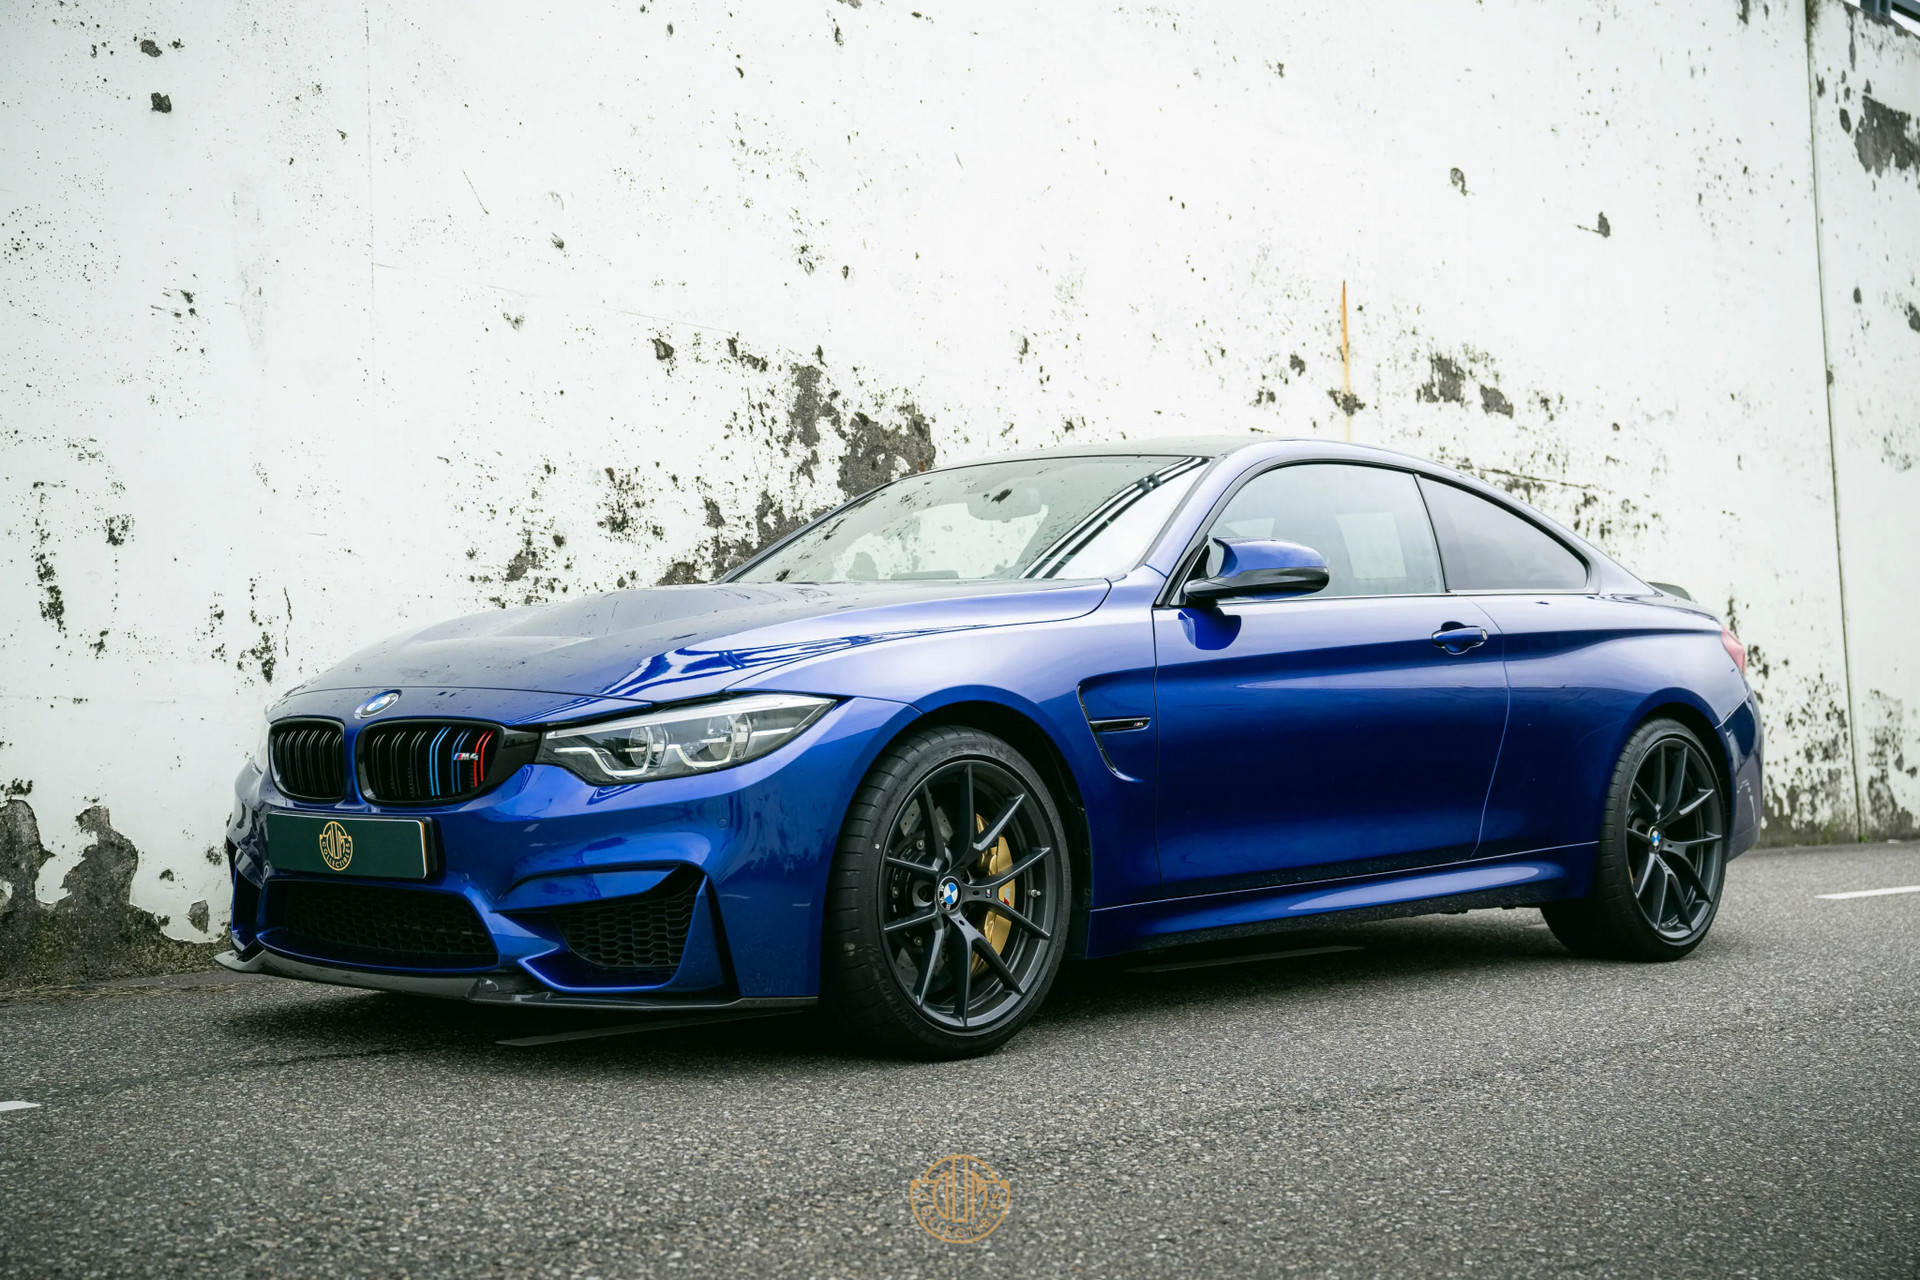 BMW 4 Serie Coupé M4 CS 2017 San marino blau metallic 3